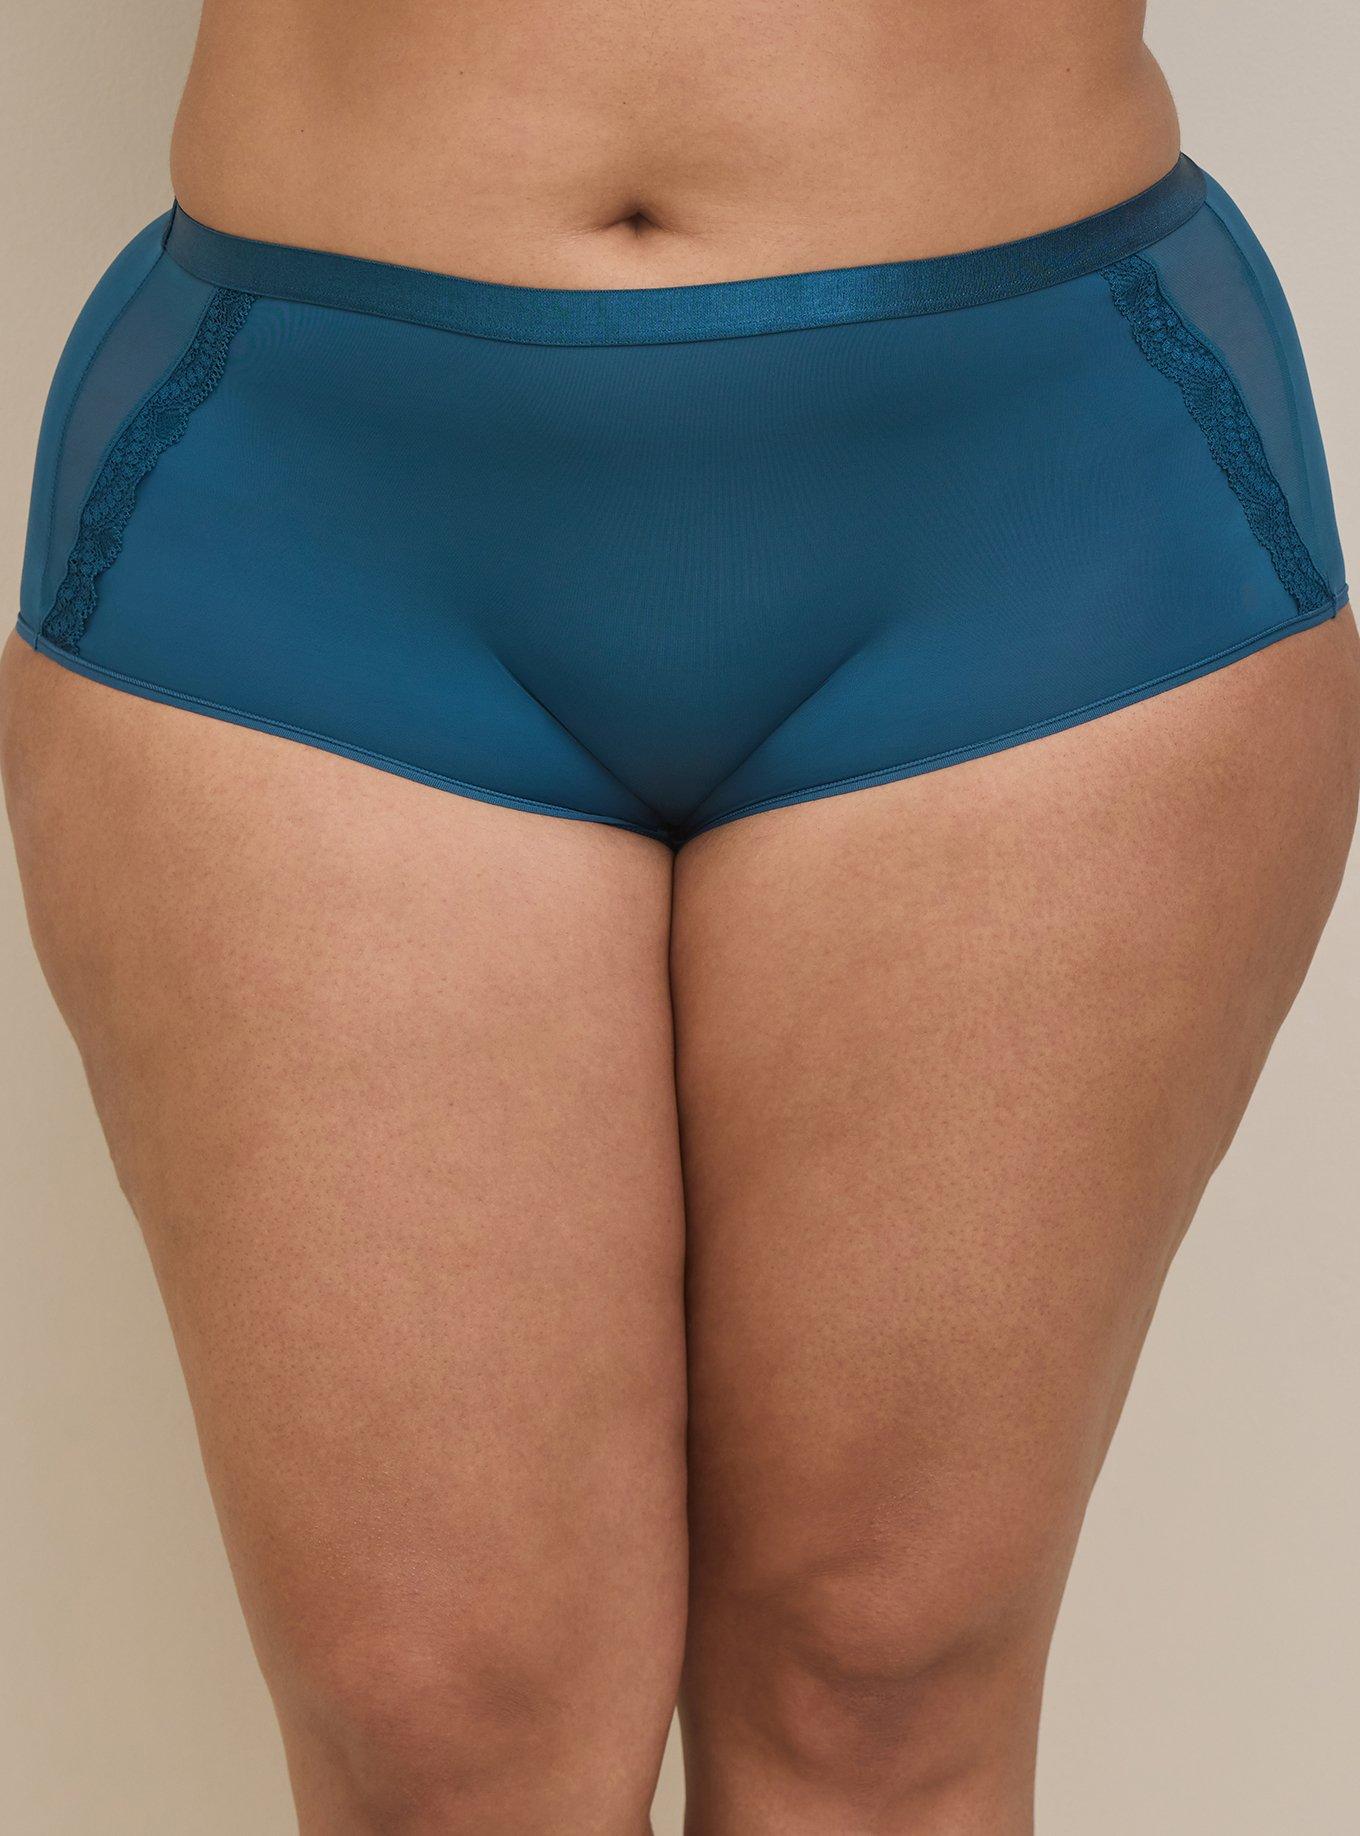 Plus Size WONDER WOMAN Torrid Panties Size 2 Retails US 16.90 READ